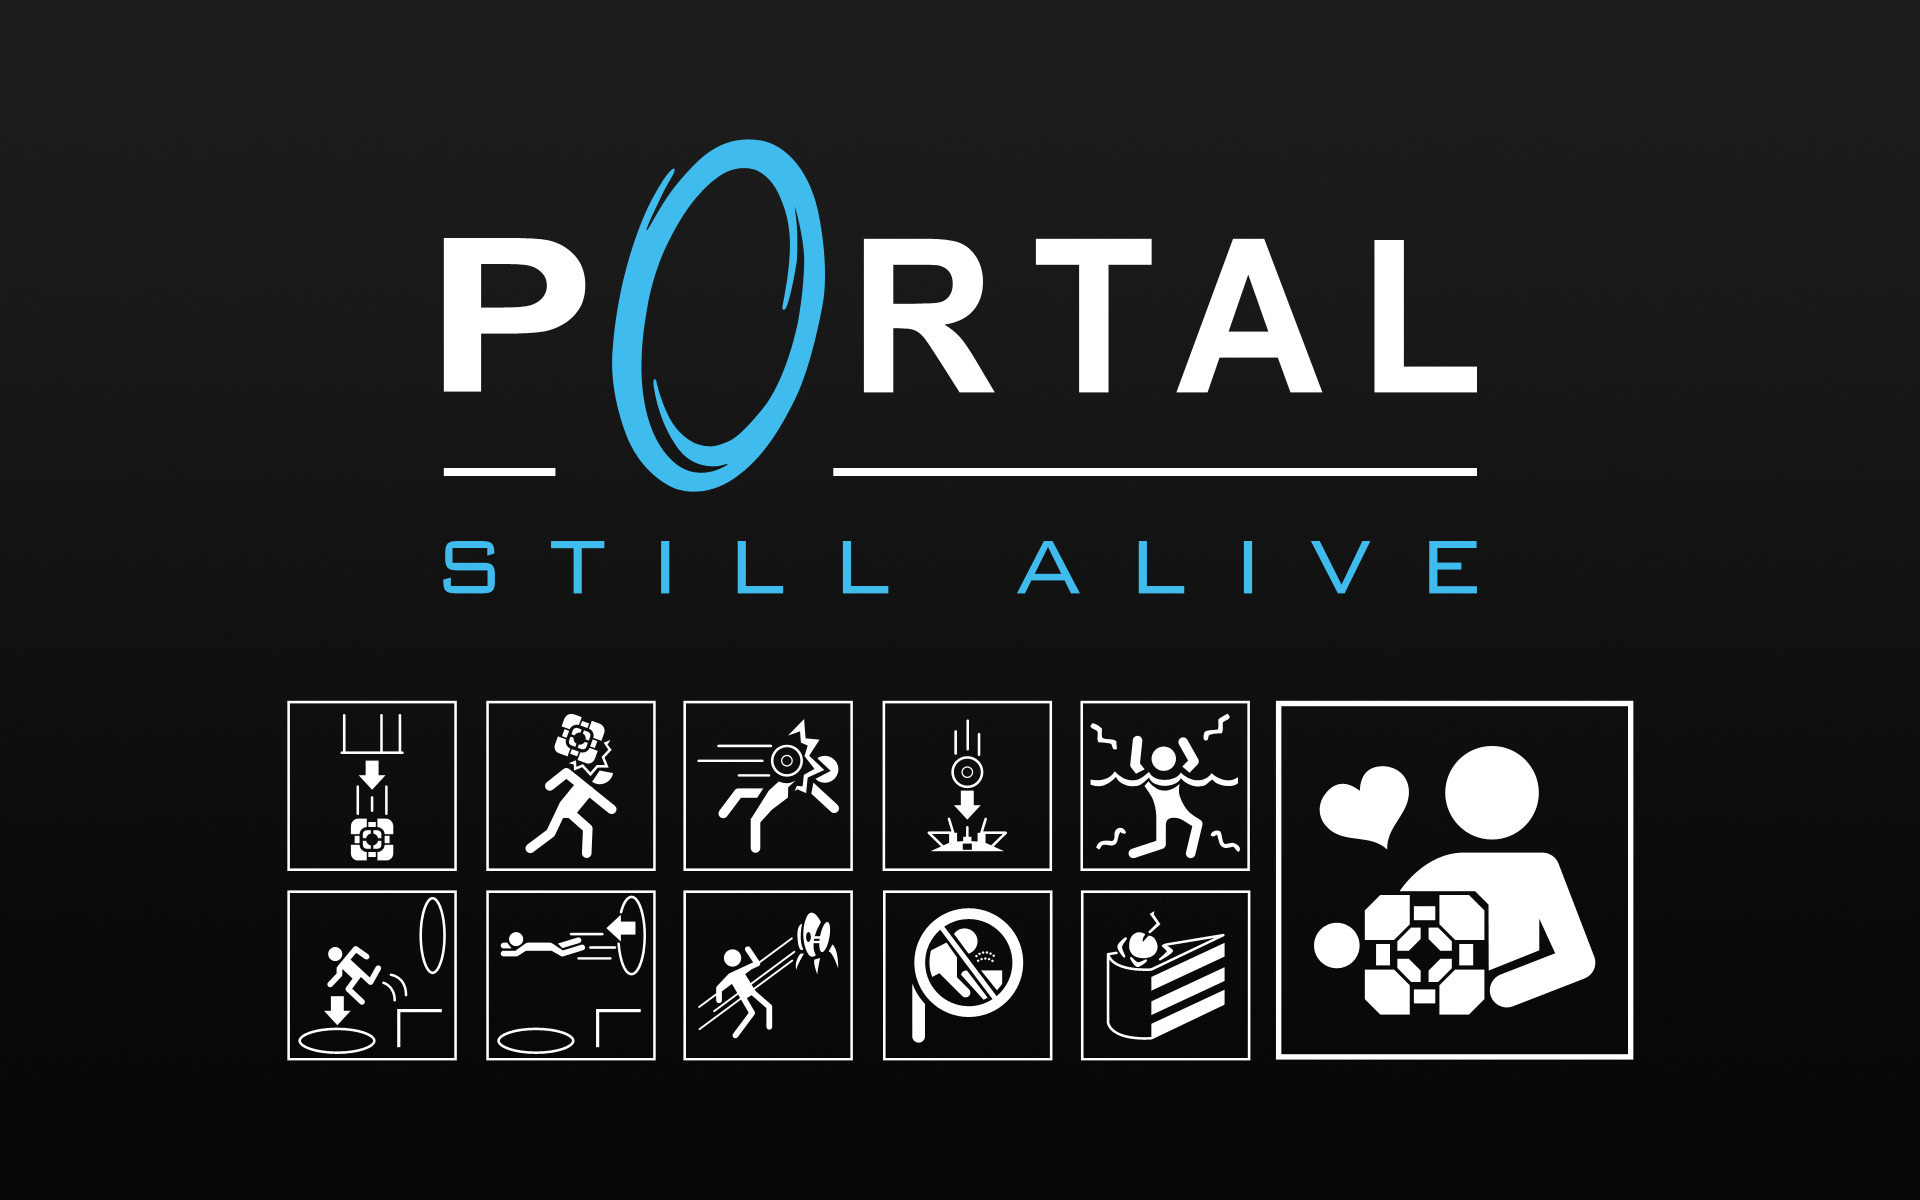 Portal 2 no image фото 55